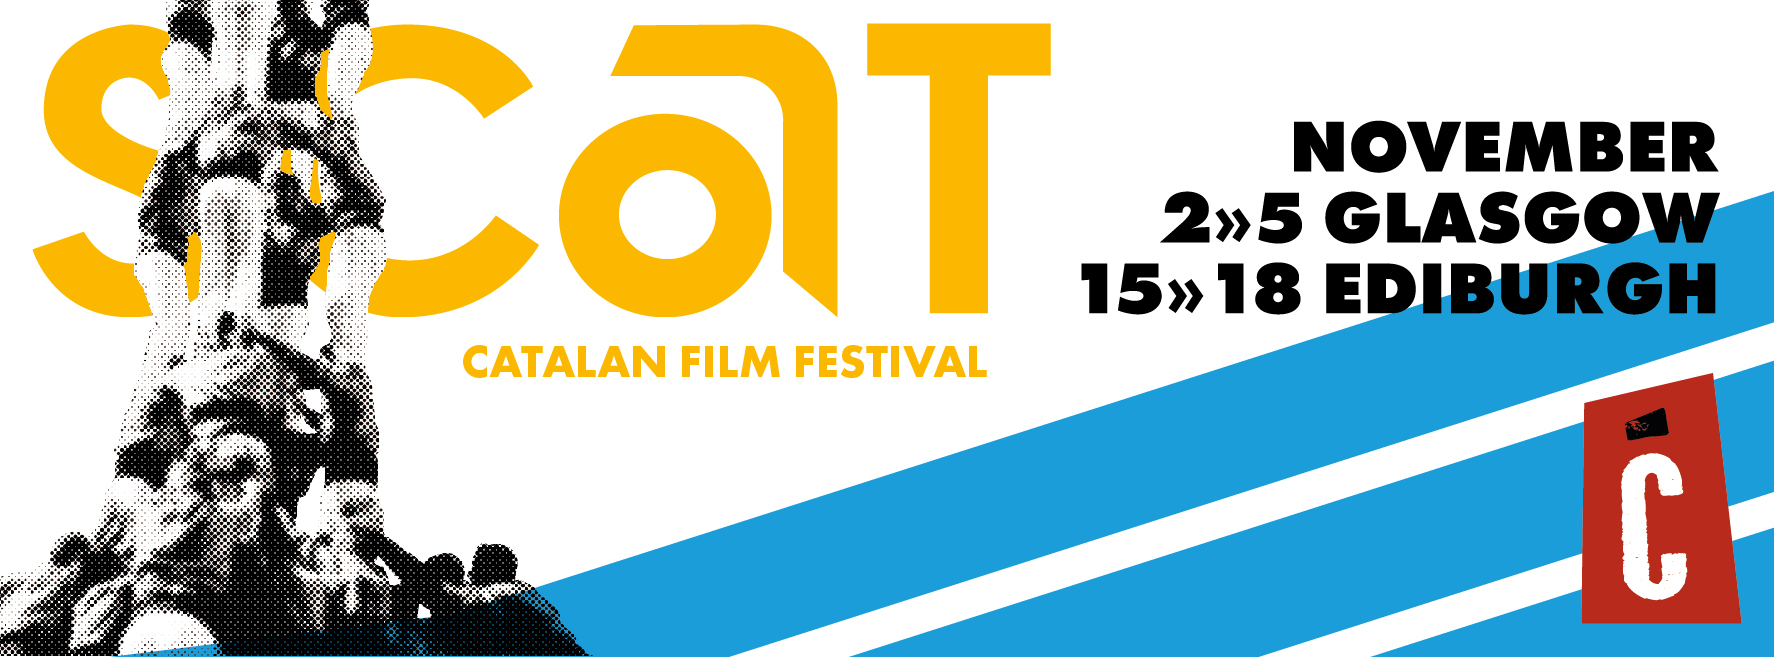 catalan film festival in scotland